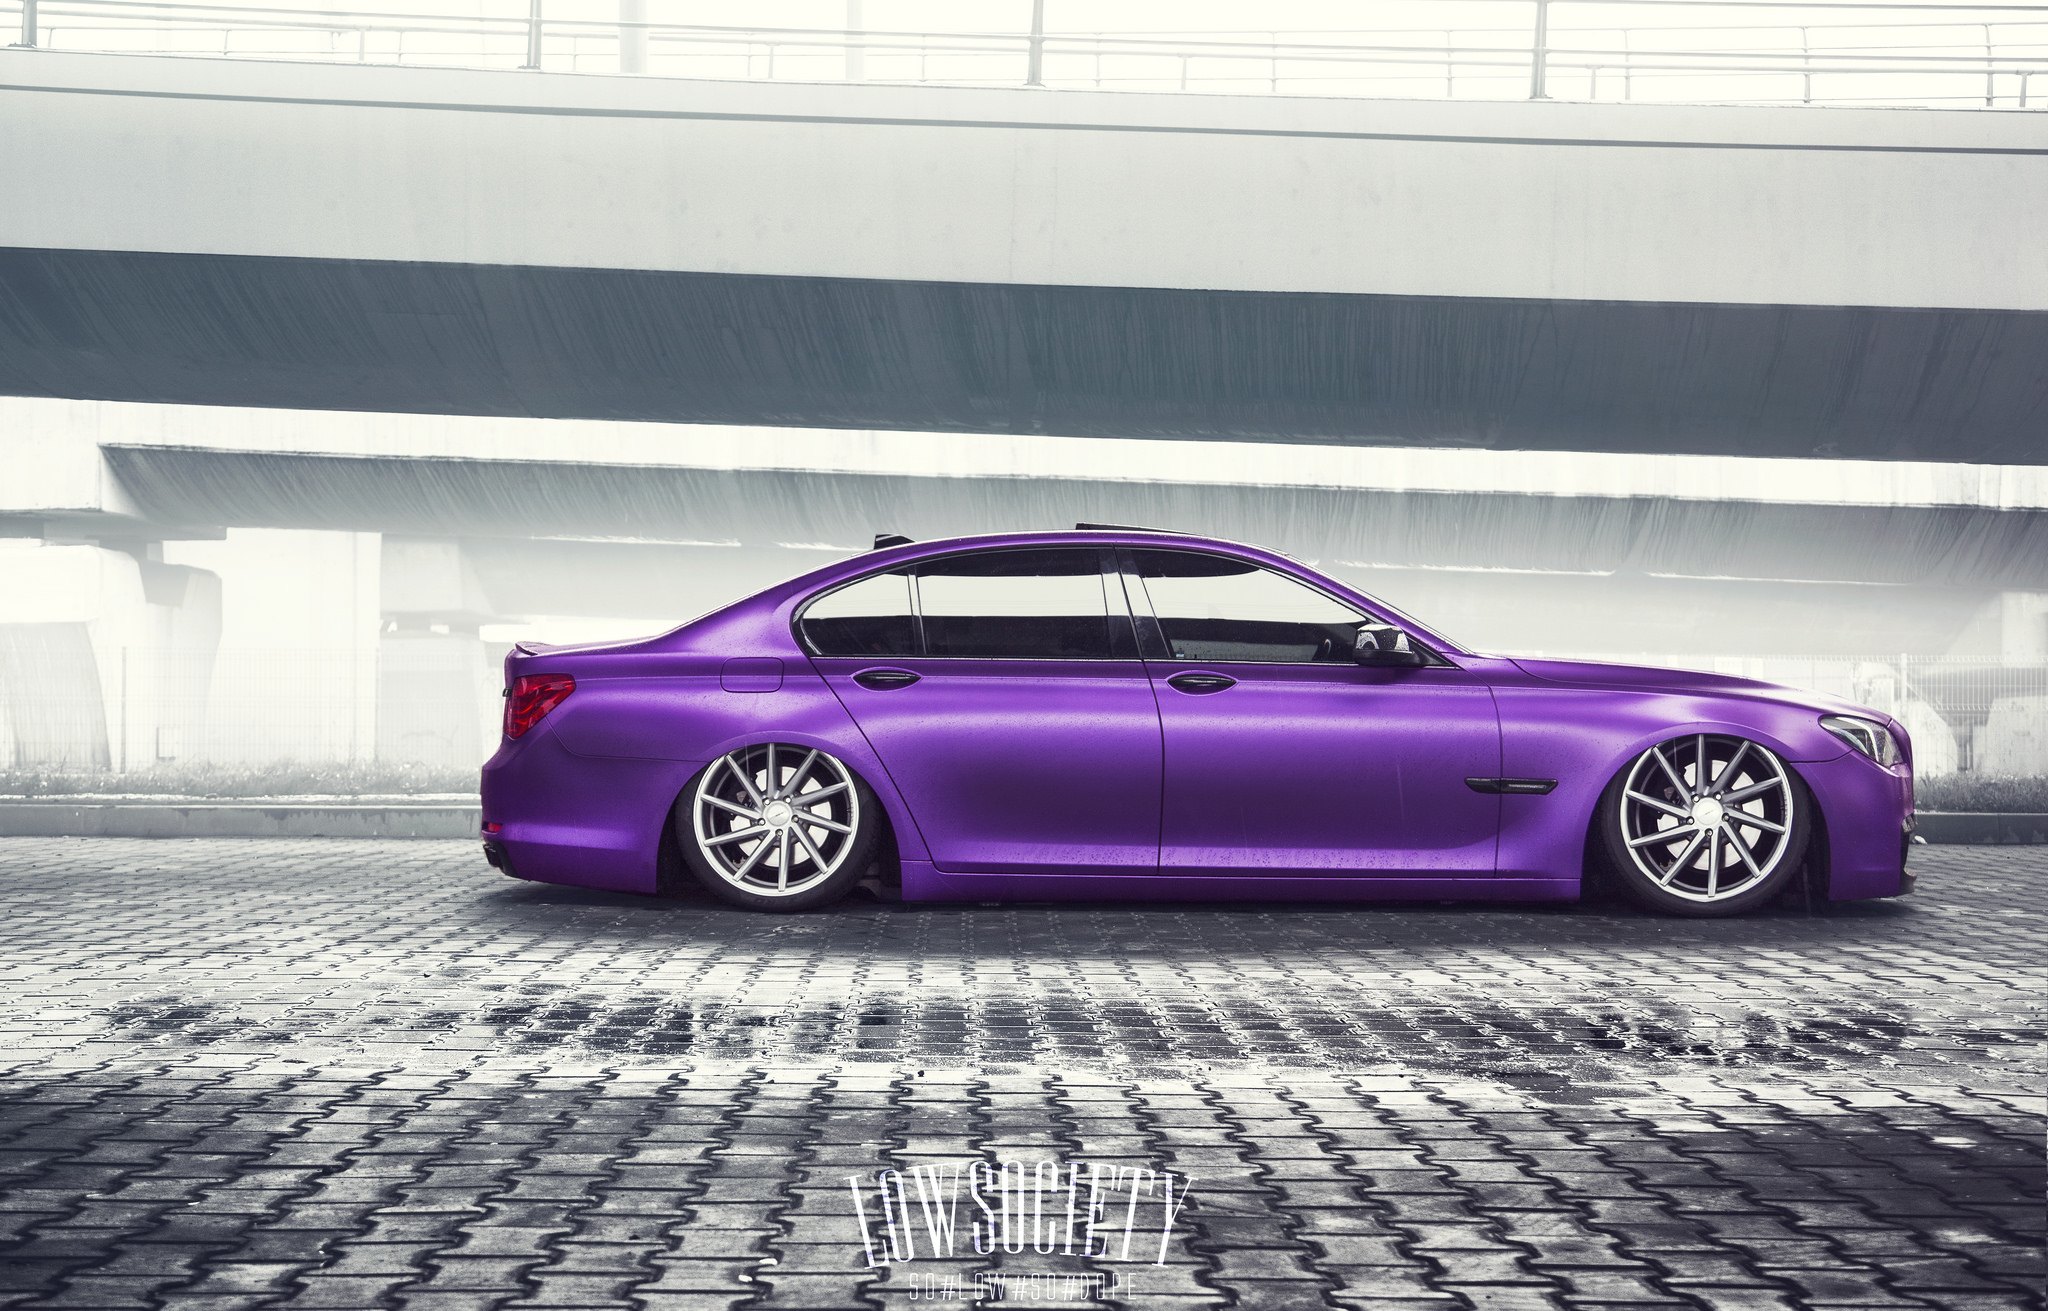 Custom Chrome Wheels on Purple BMW 7-Series - Photo by Ciprian Mihai